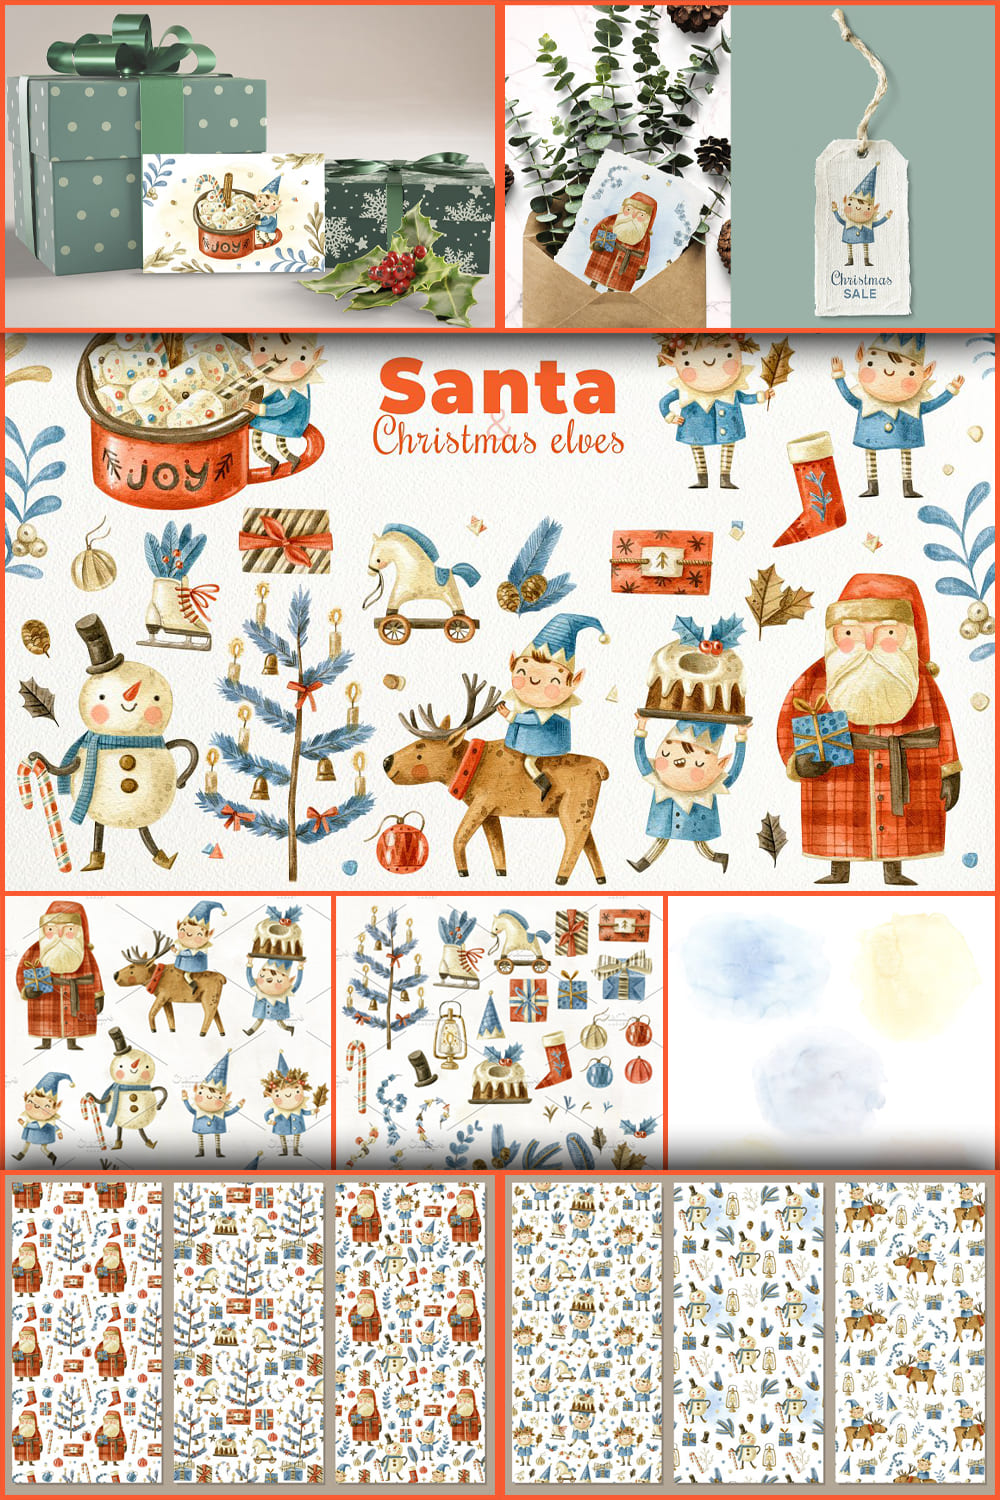 Santa Claus And Cute Elves - Pinterest.